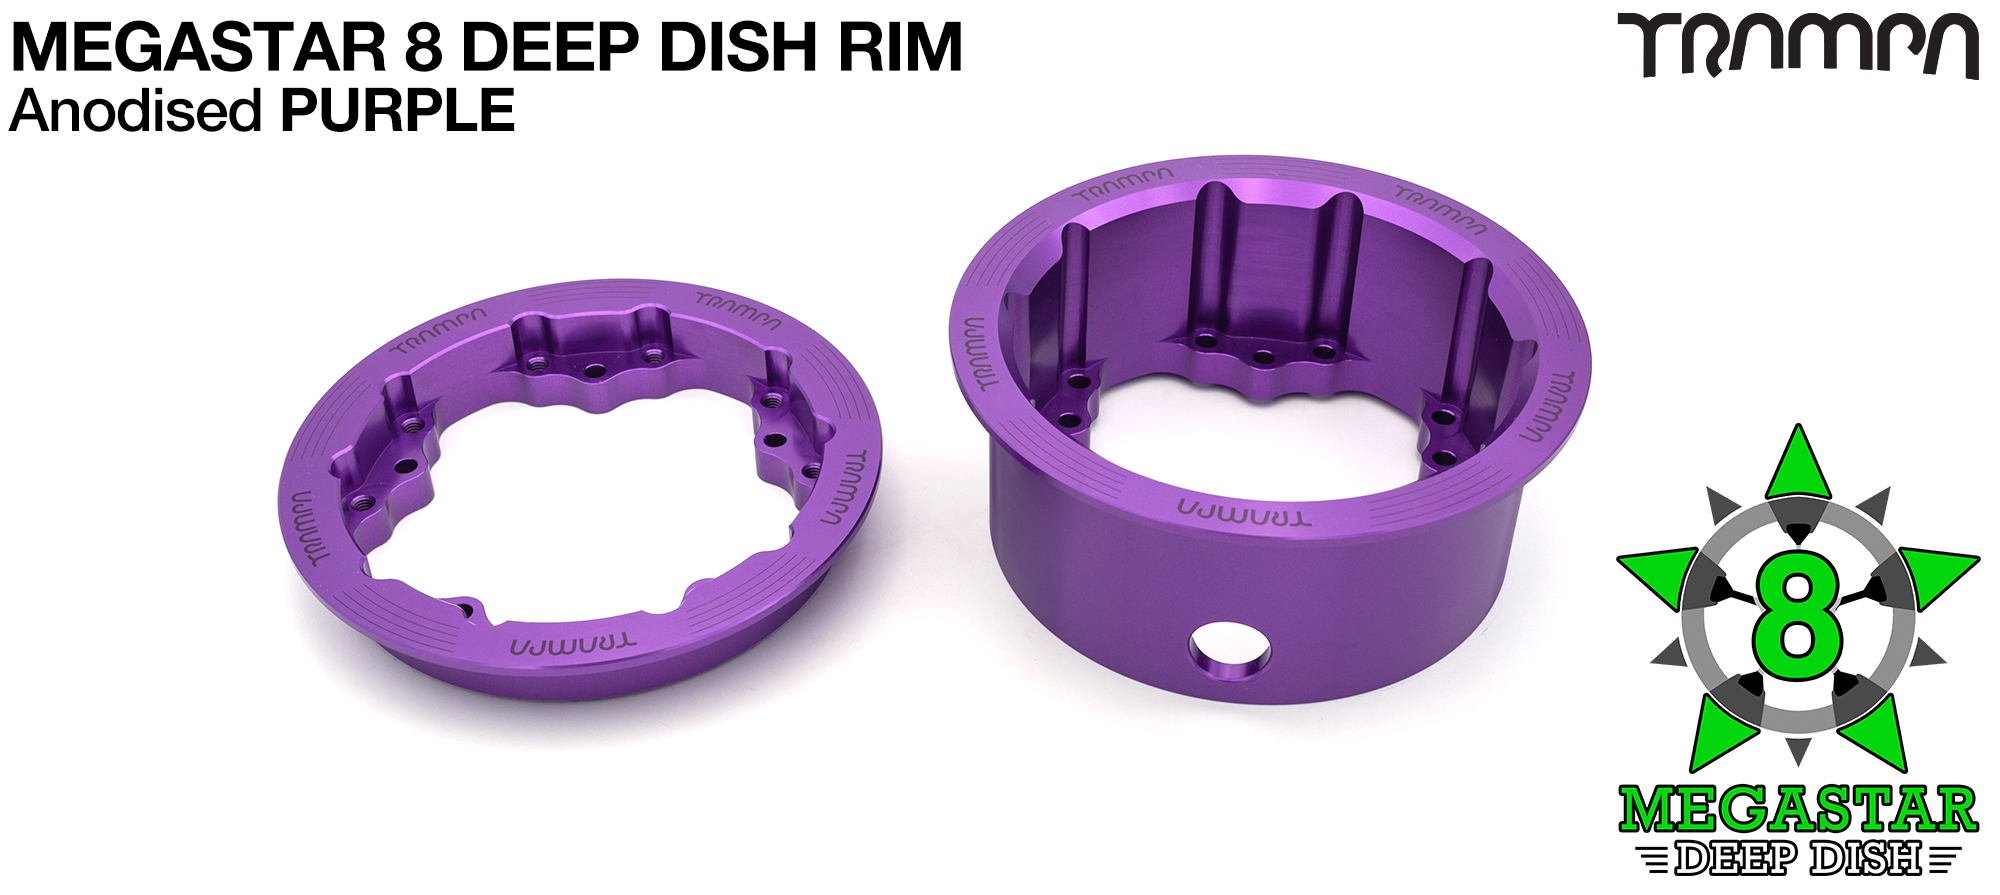 DEEP-DISH MEGASTAR 8 Rims - PURPLE 